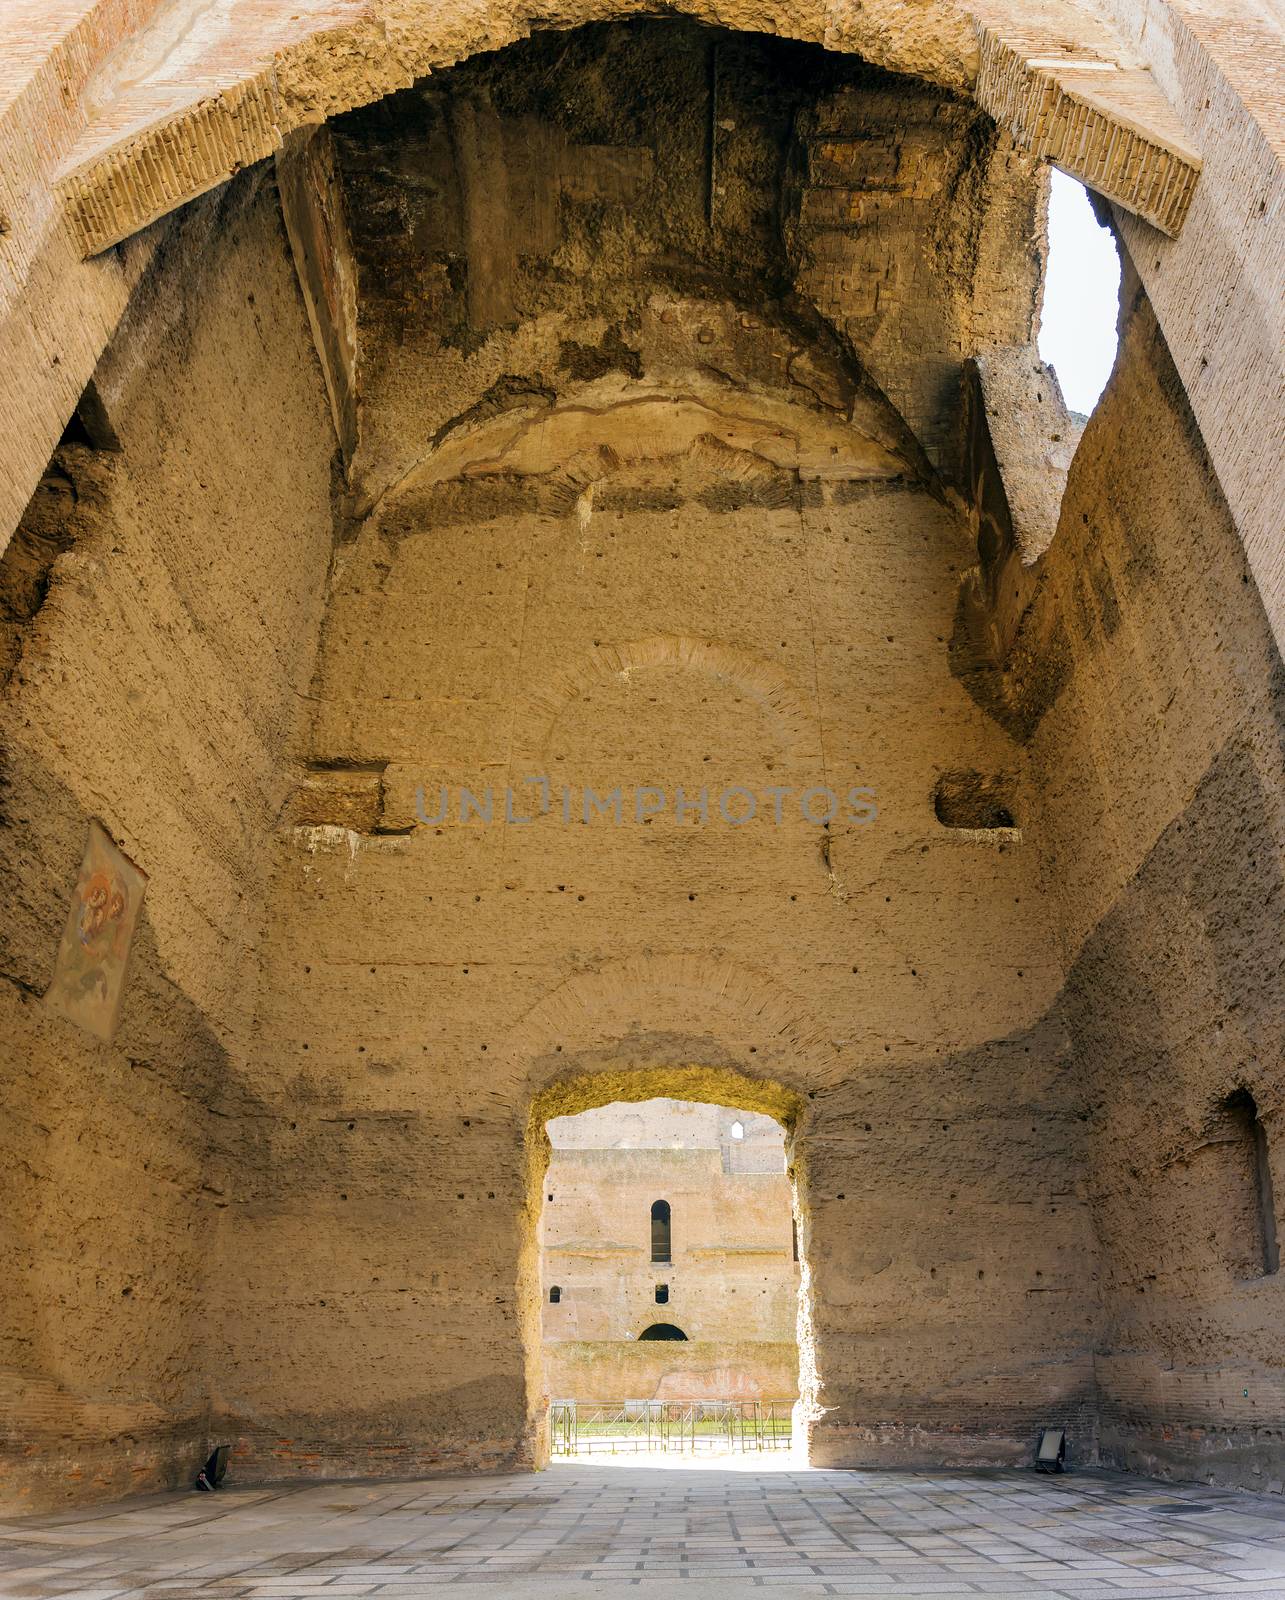 Baths of Caracalla, ancient ruins of roman public thermae by rarrarorro